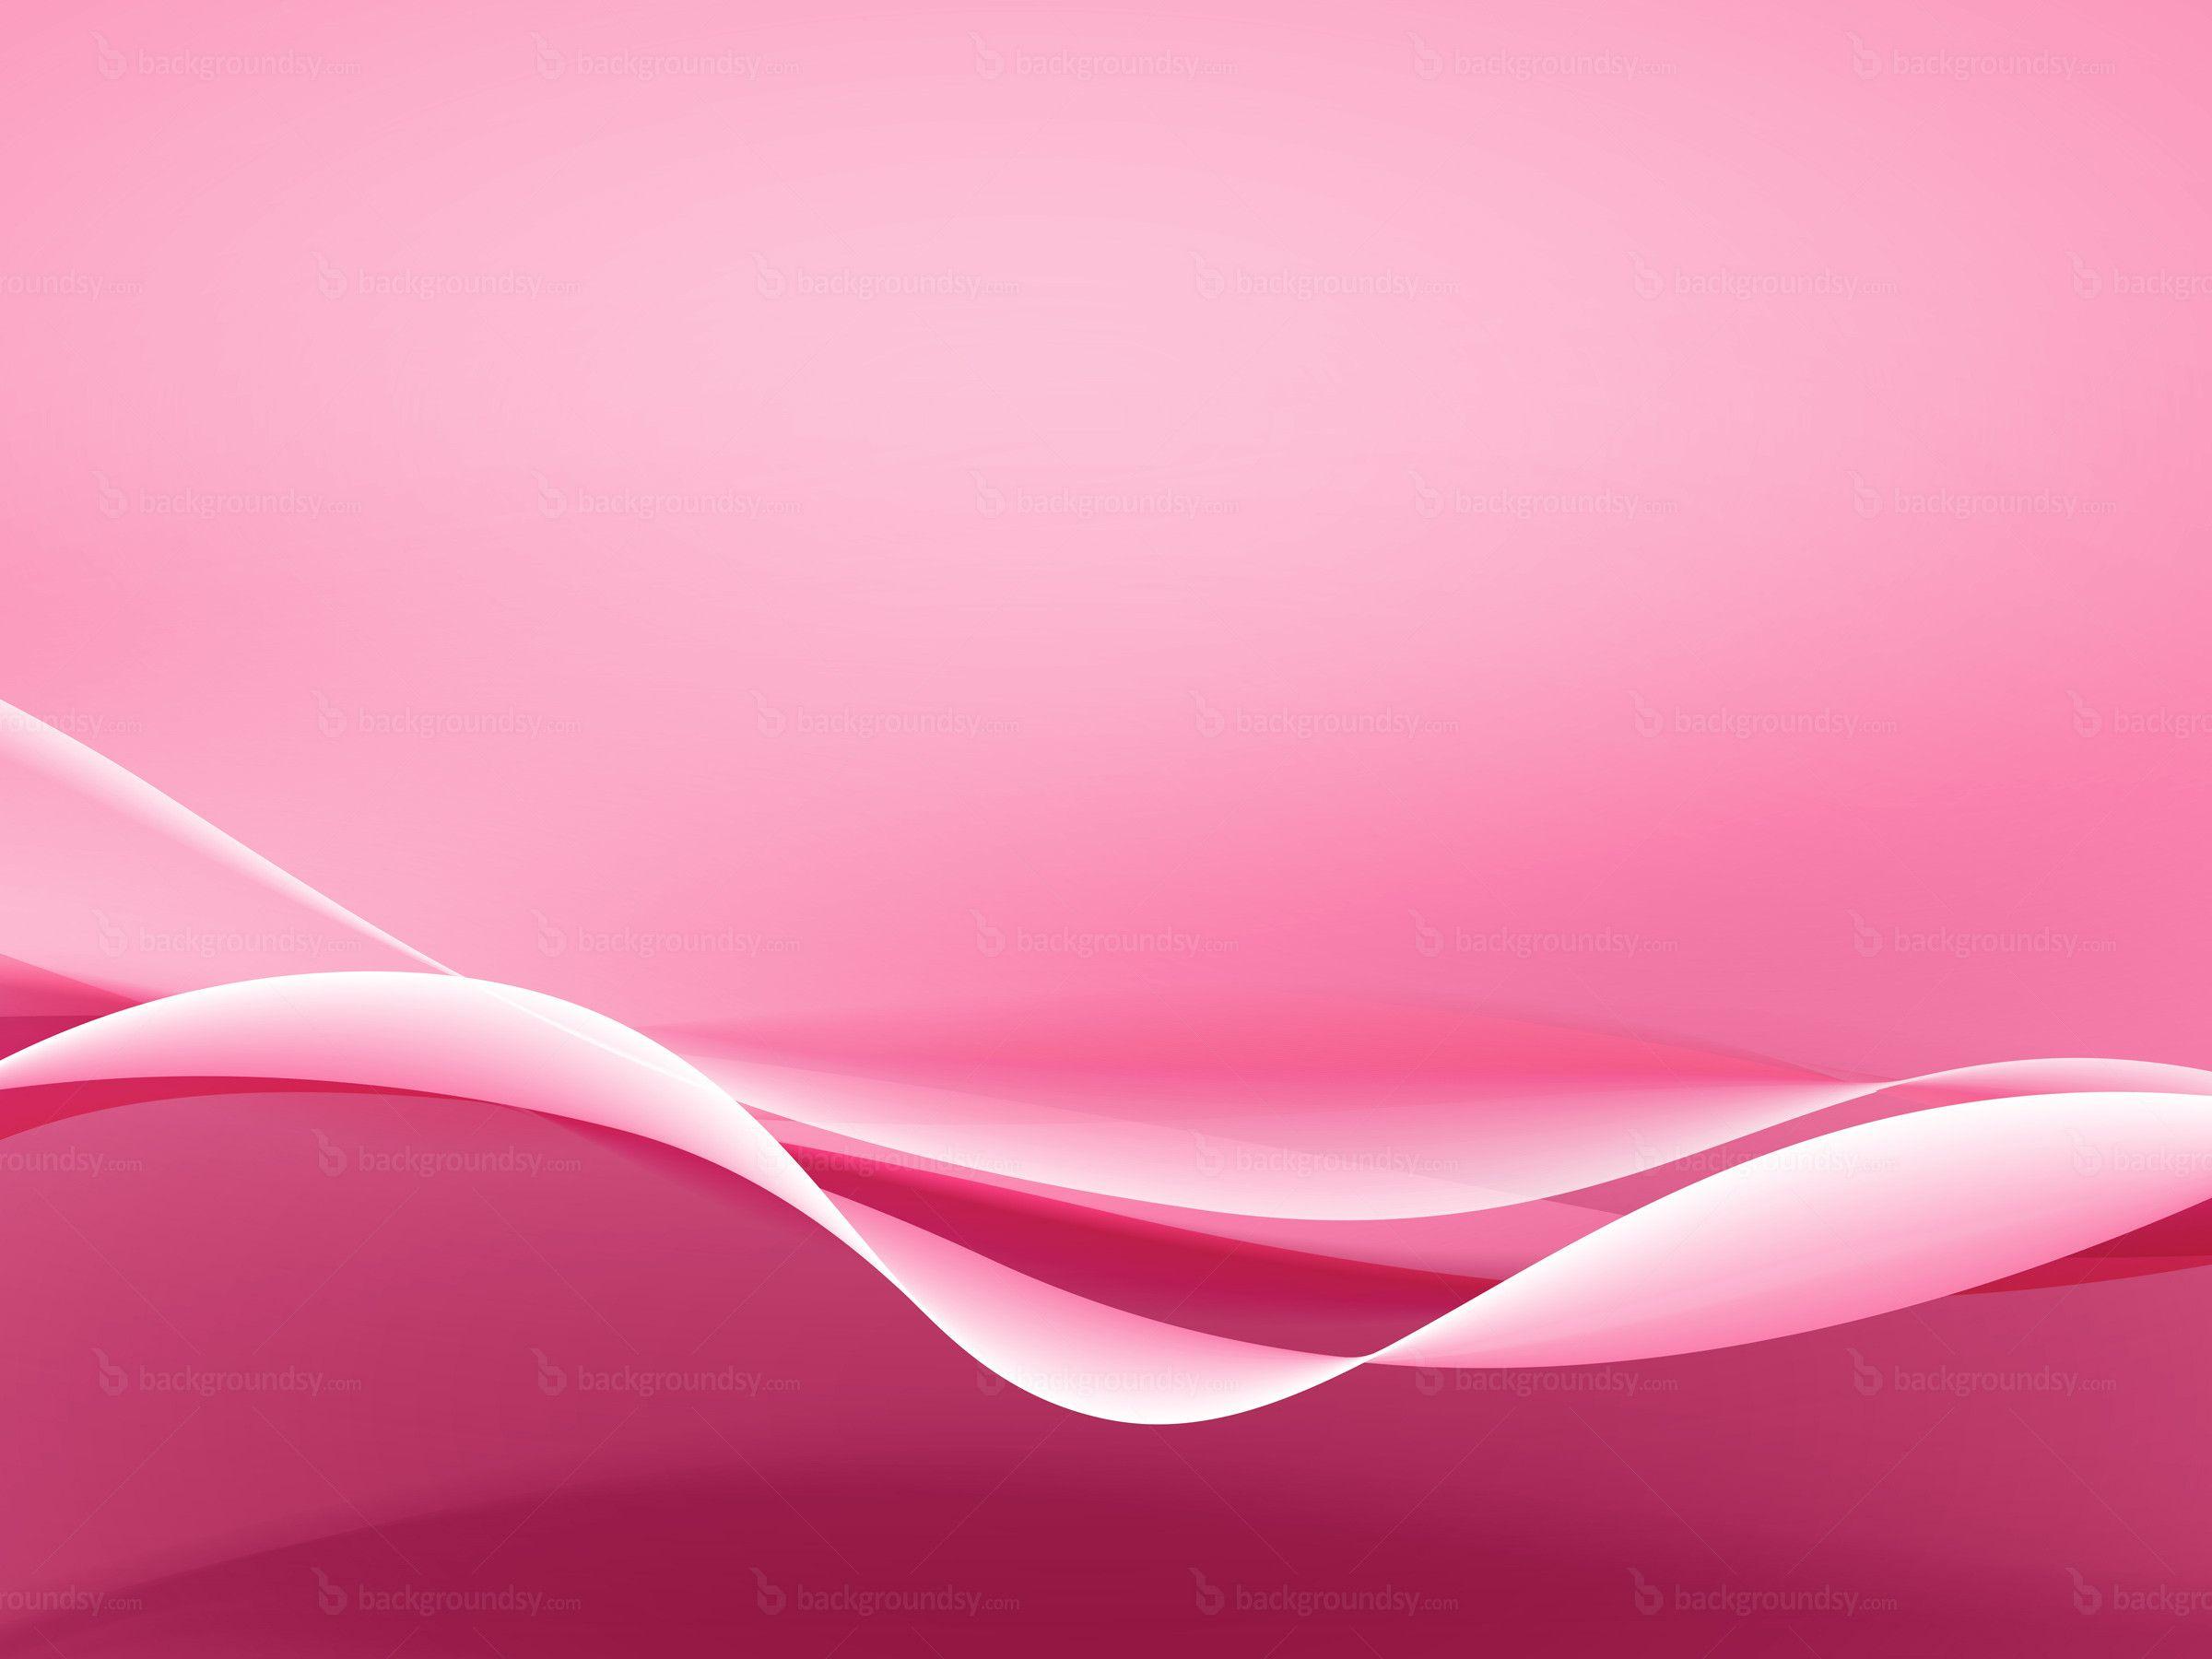 Pink waves background